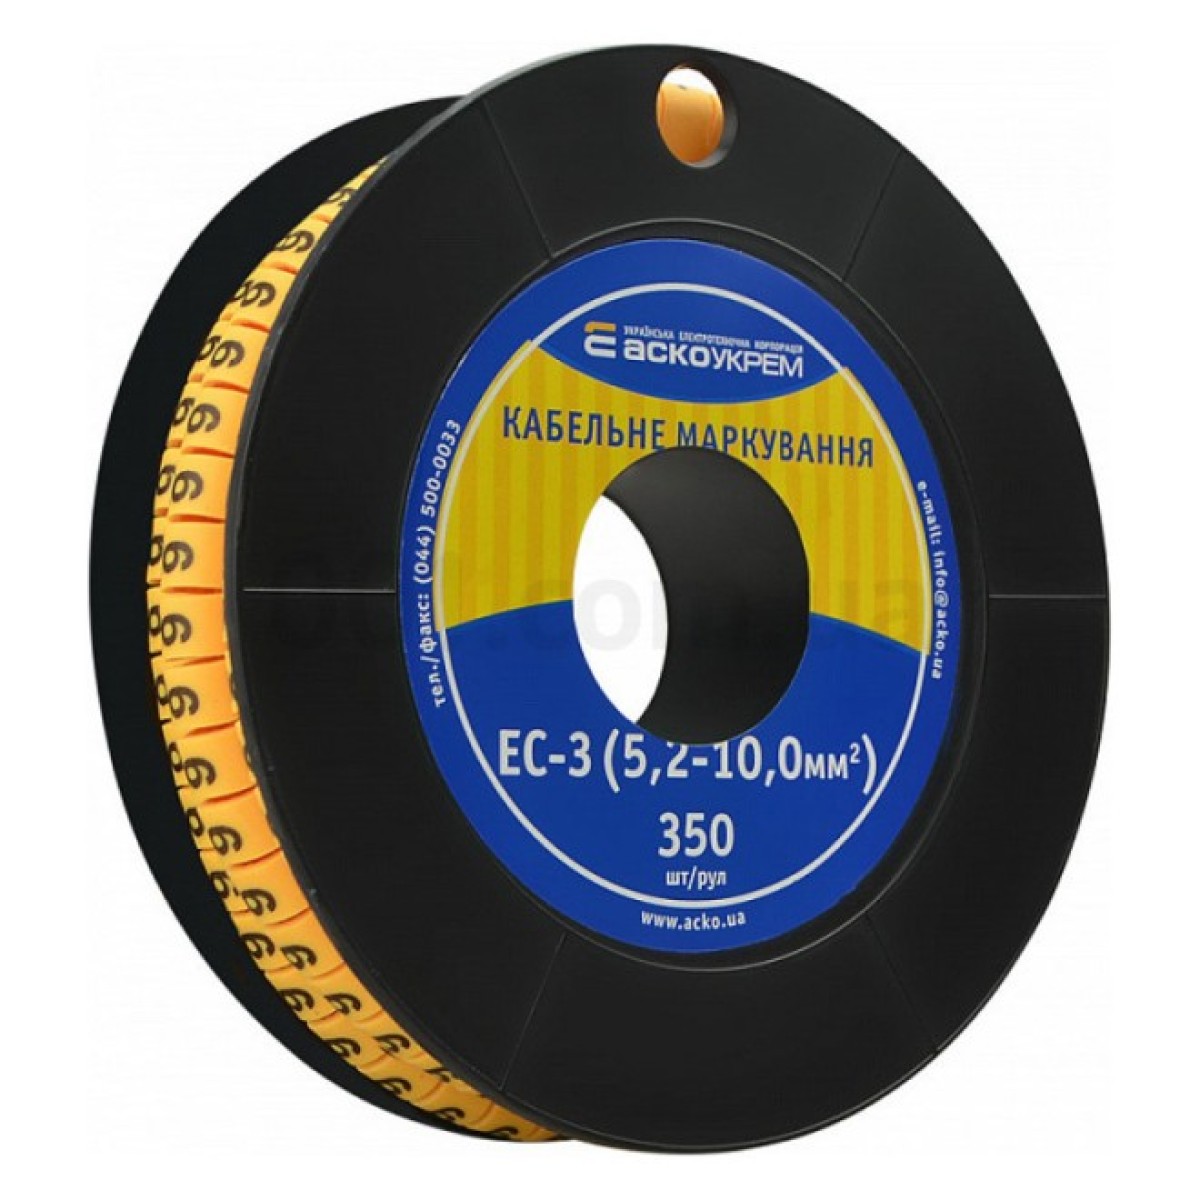 Маркировка EC-3 для кабеля 5,2-10,0 мм² символ «9» (рулон 250 шт.), АСКО-УКРЕМ 98_98.jpg - фото 1